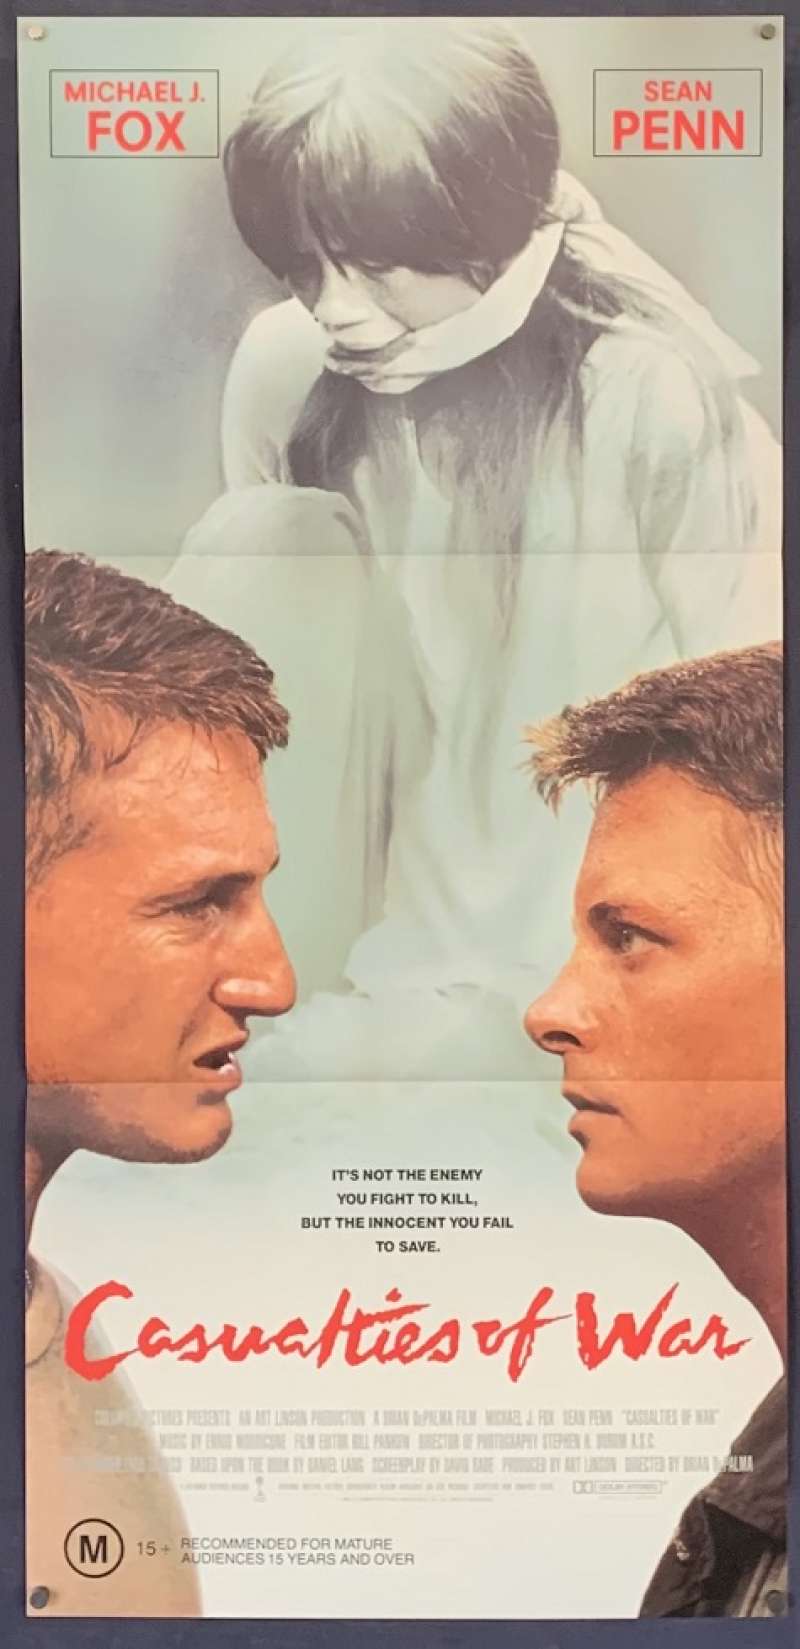 kam Creed Markér All About Movies - Casualties Of War Poster Original Daybill 1989 Michael J  Fox Sean Penn Vietnam